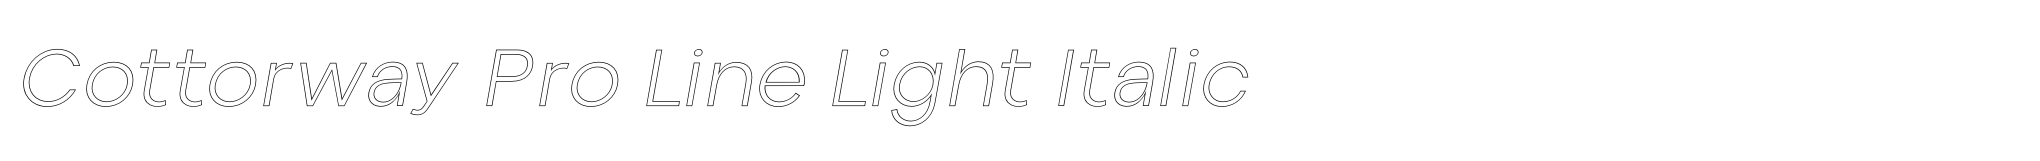 Cottorway Pro Line Light Italic image